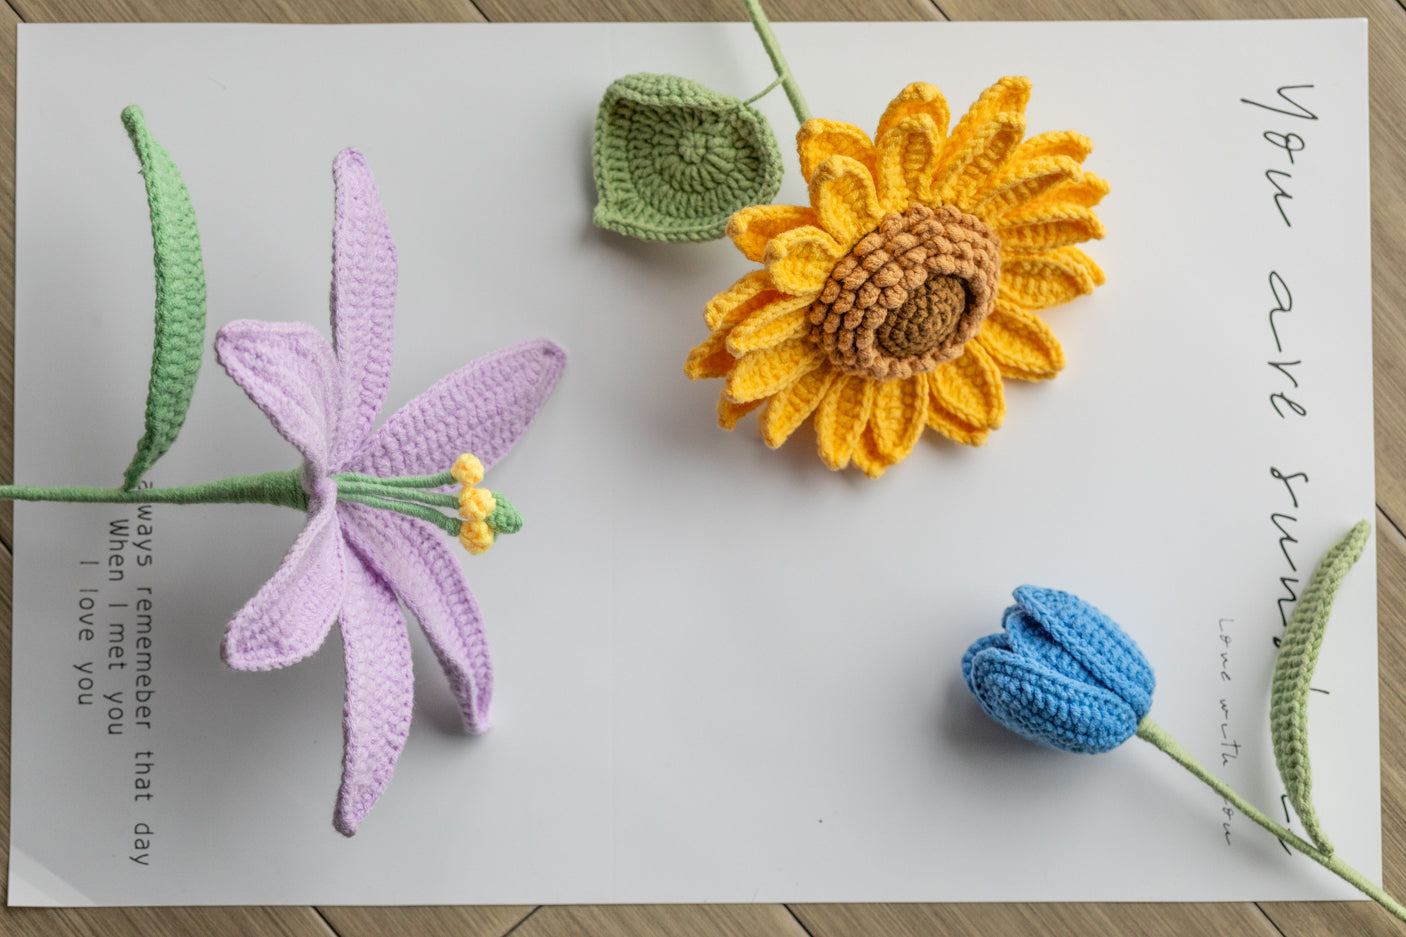 Crochet Tulip Bouquet  Free crochet doily patterns, Crochet bouquet,  Crochet flowers